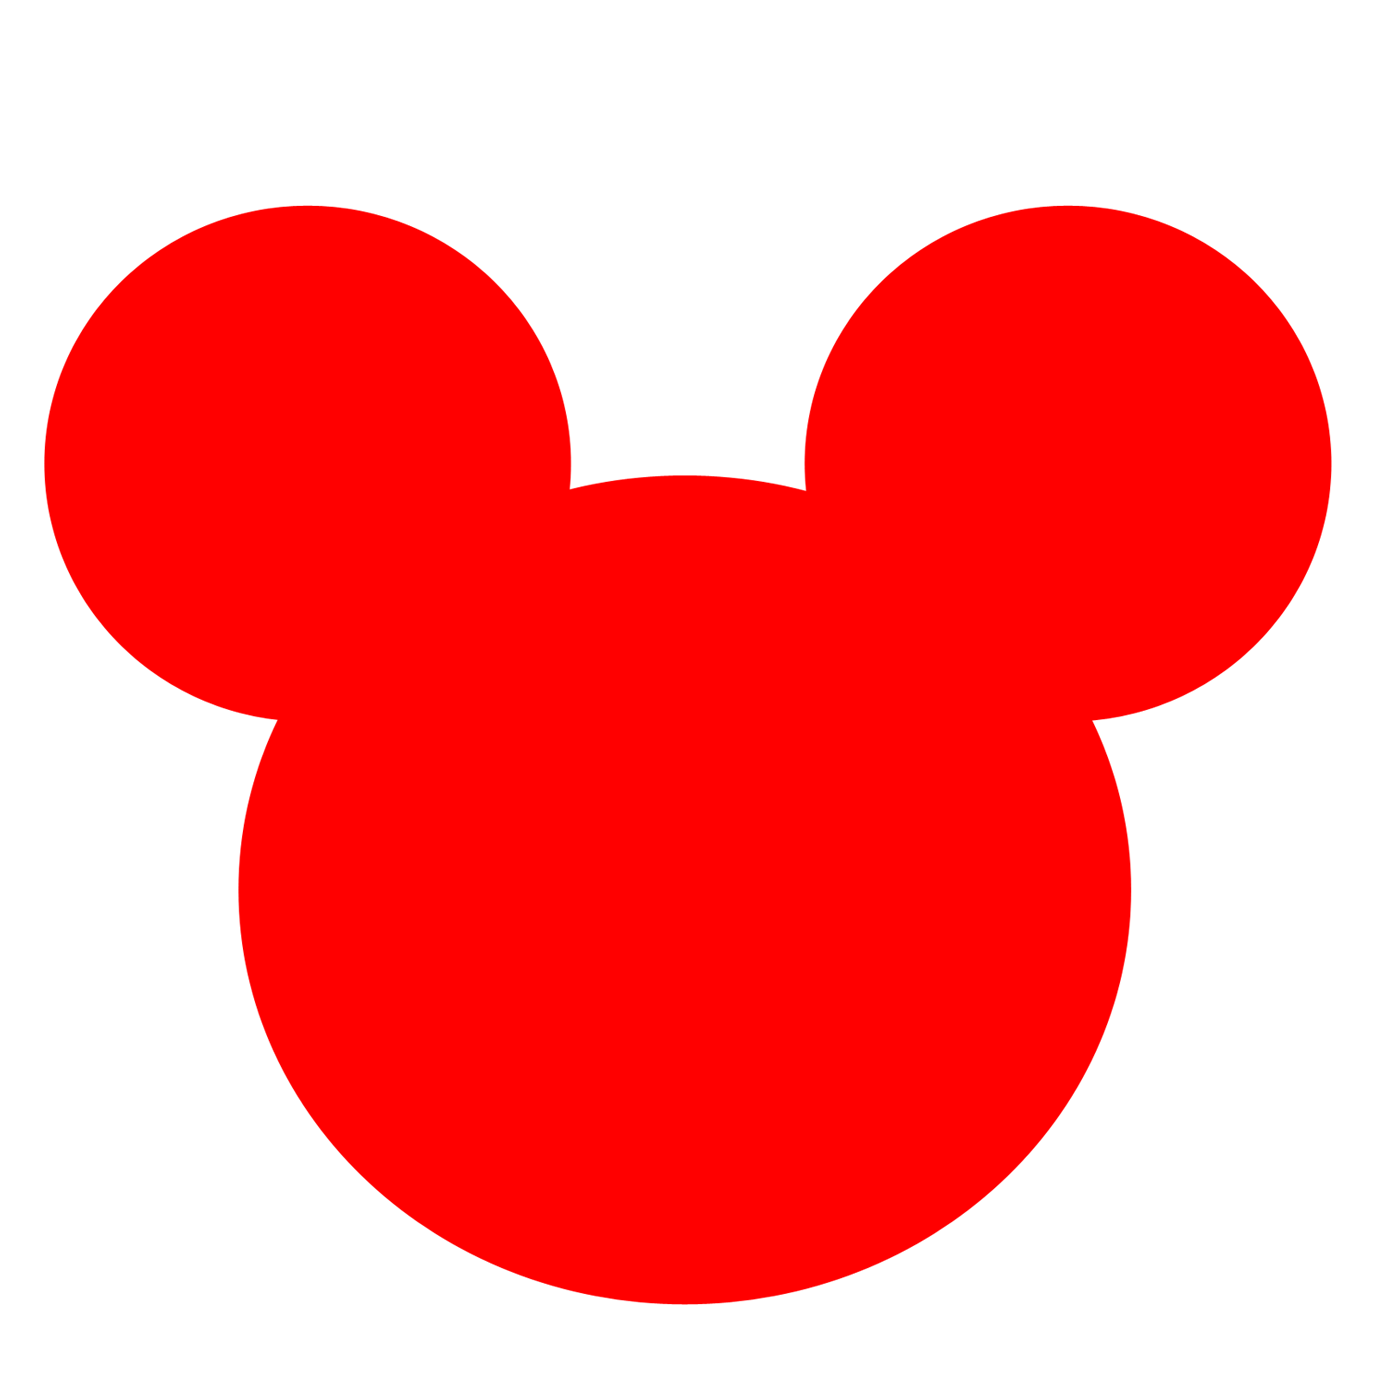 Logo De Mickey Mouse - ClipArt Best